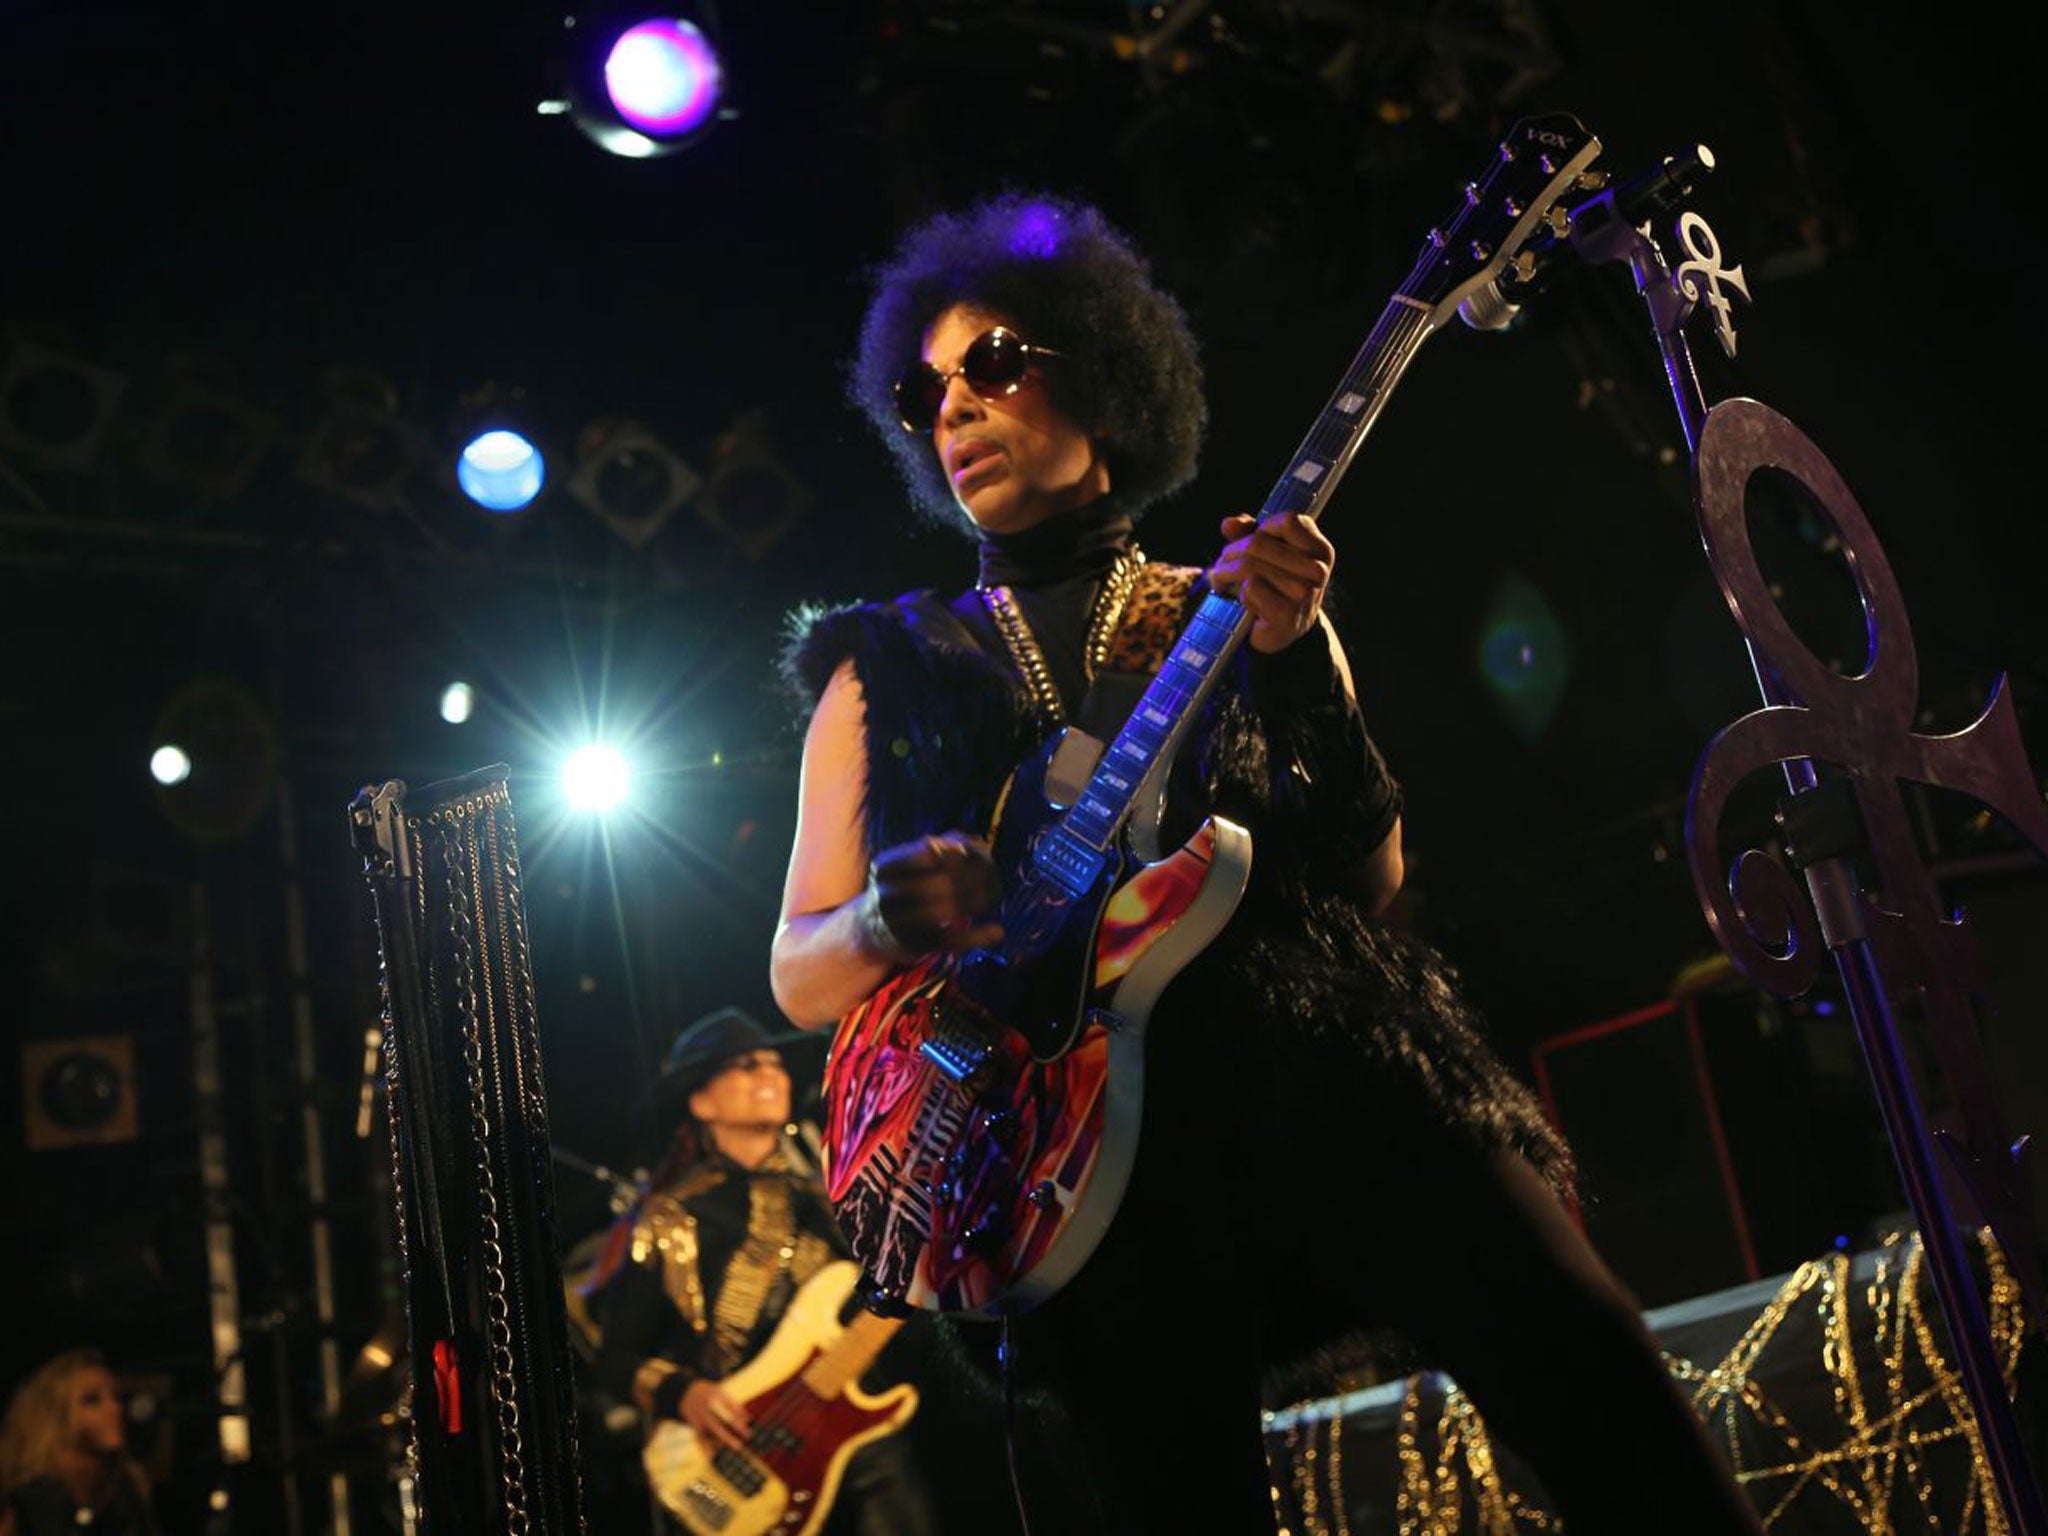 Prince, musician